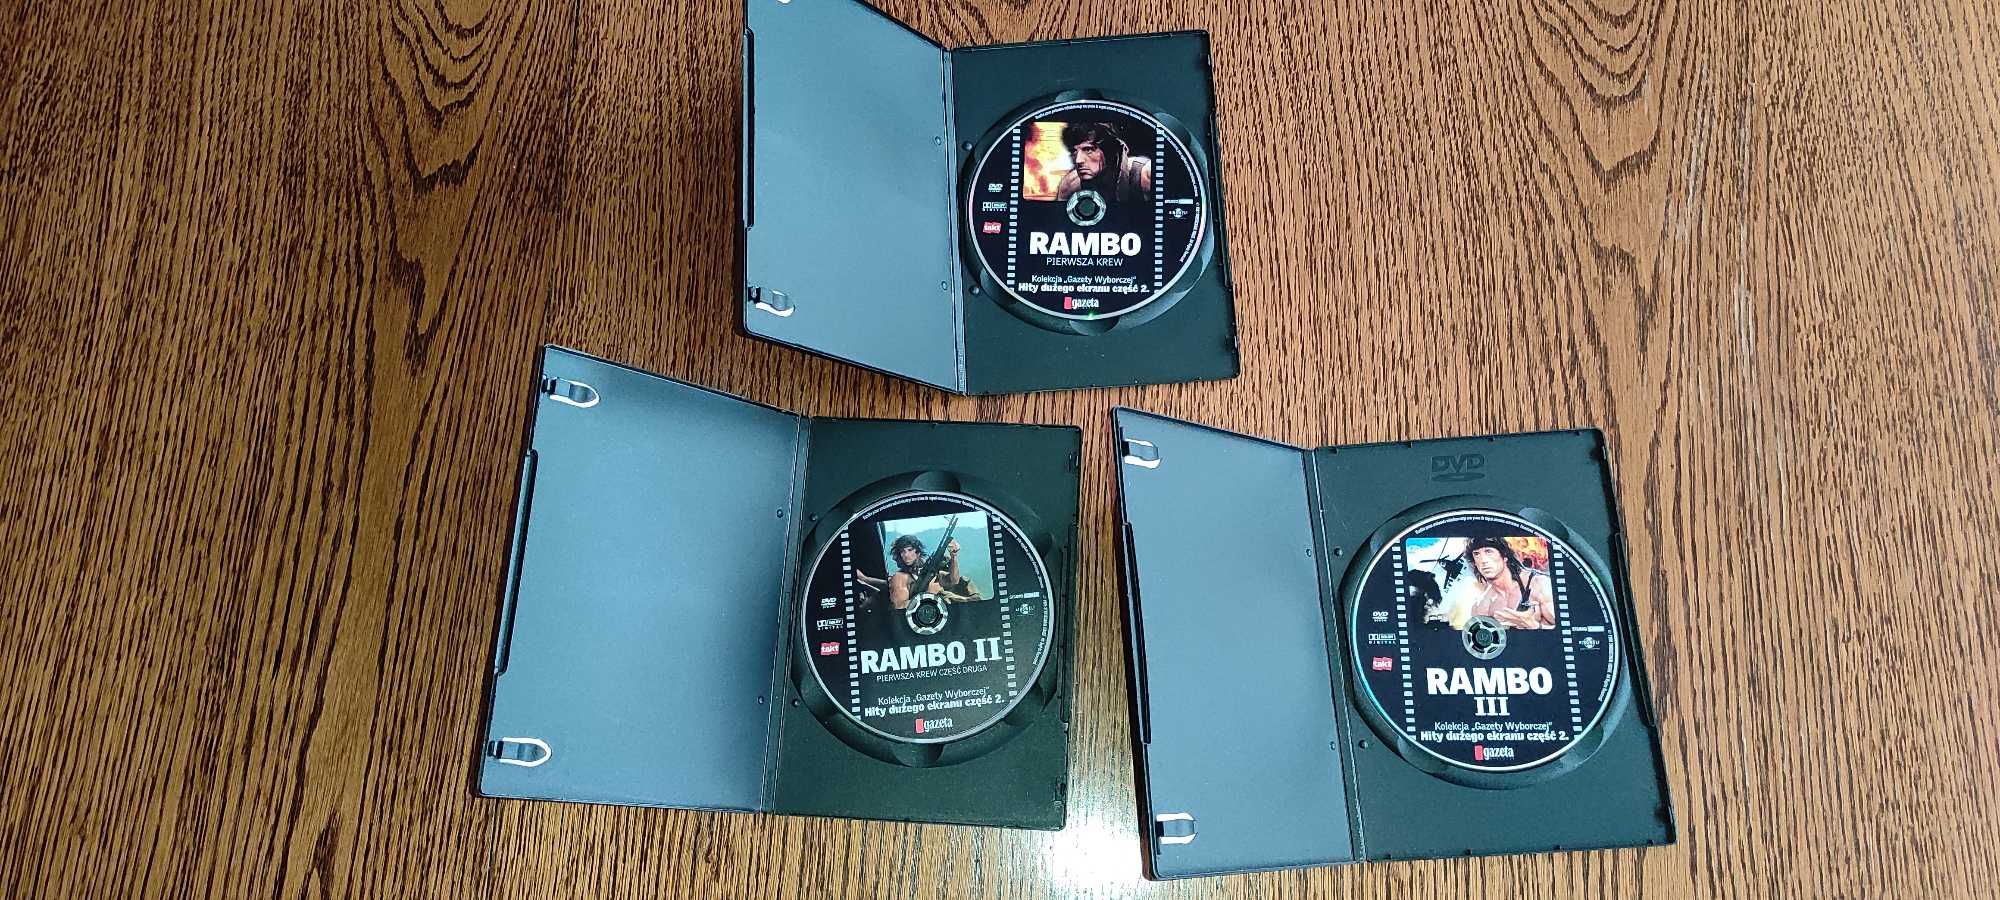 DVD klasyka filmów Rambo I, II, III - zestaw 3 płyt